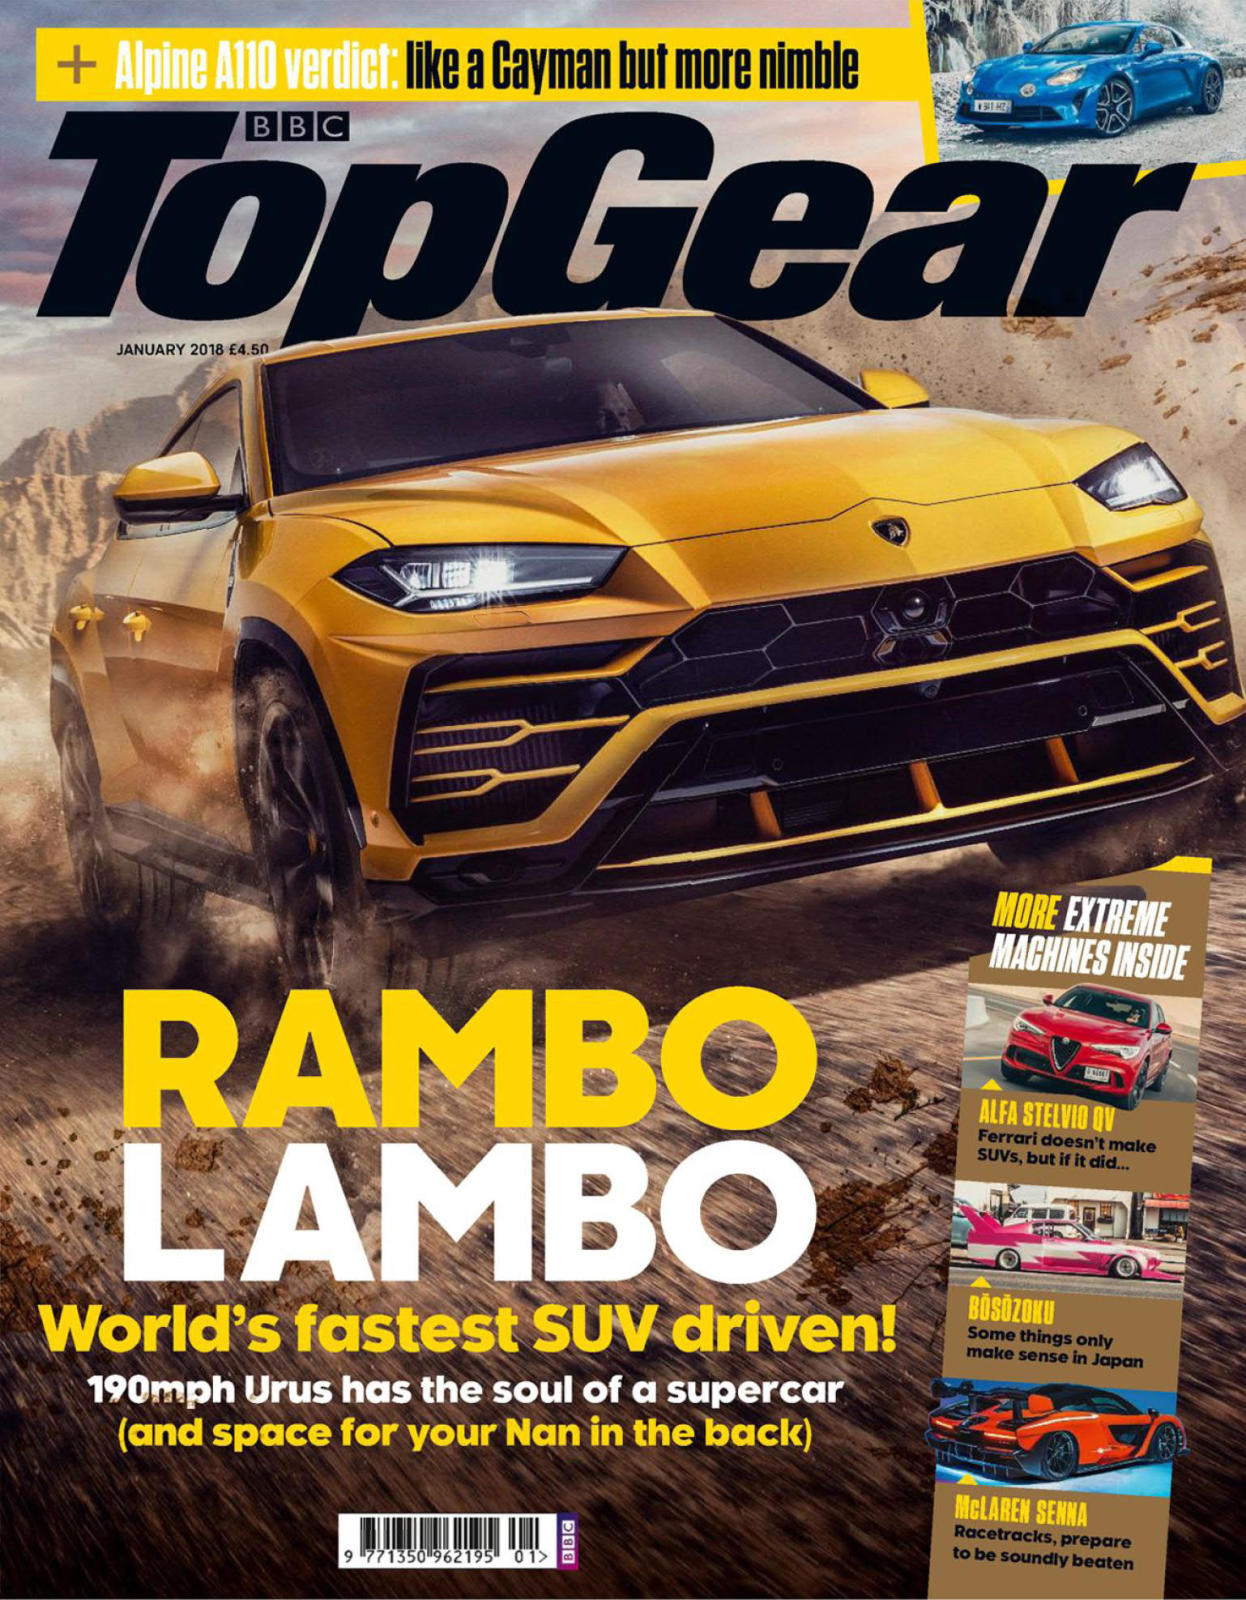 BBC Top Gear BBC疯狂汽车秀杂志 JANUARY 2018年1月刊